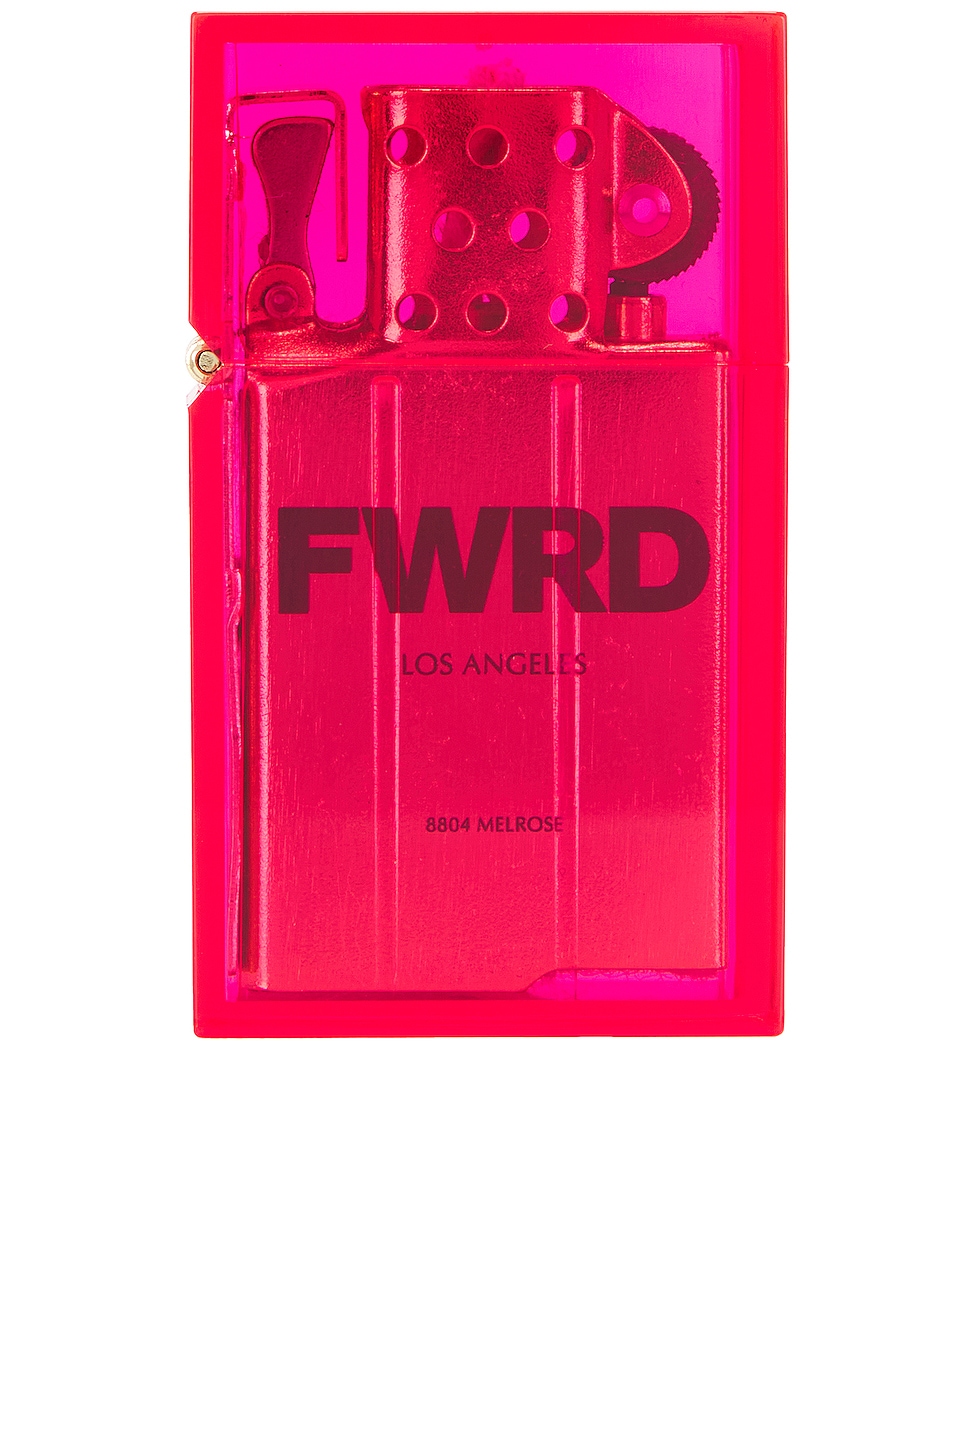 x Fwrd Hard Edge Transparent Lighter in Pink